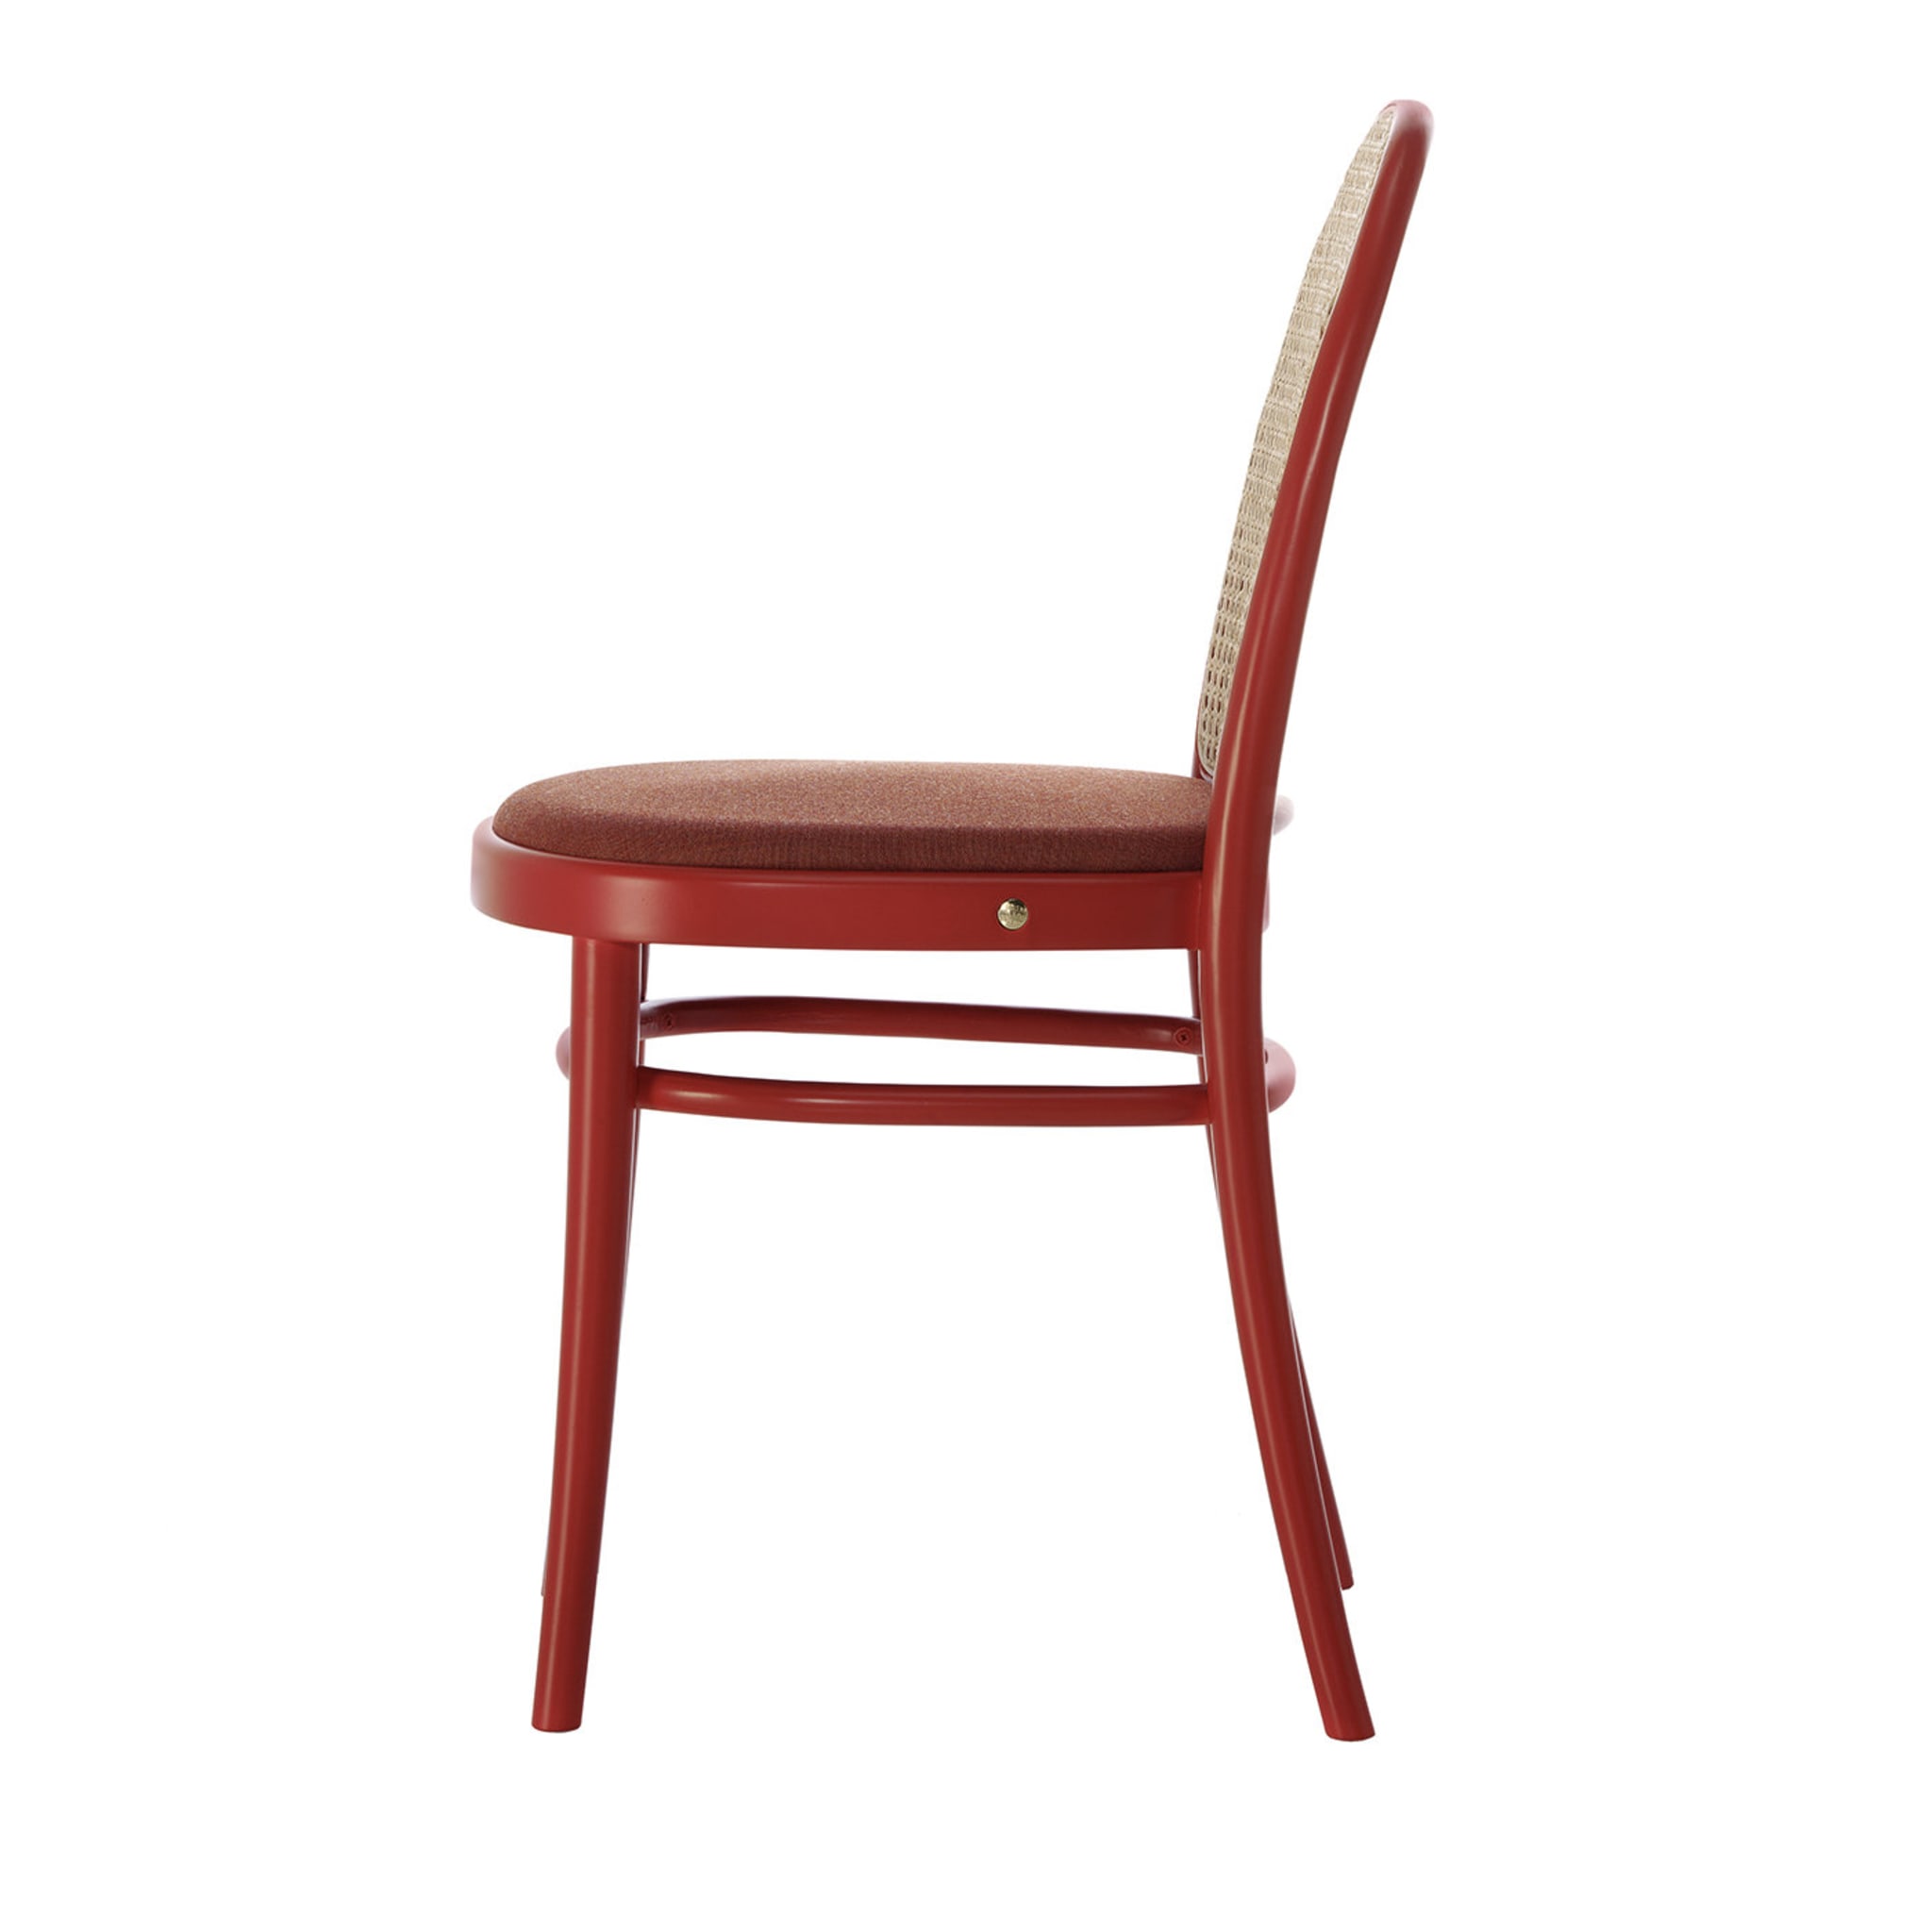 Morris Red Low Chair by GamFratesi - Alternative view 2